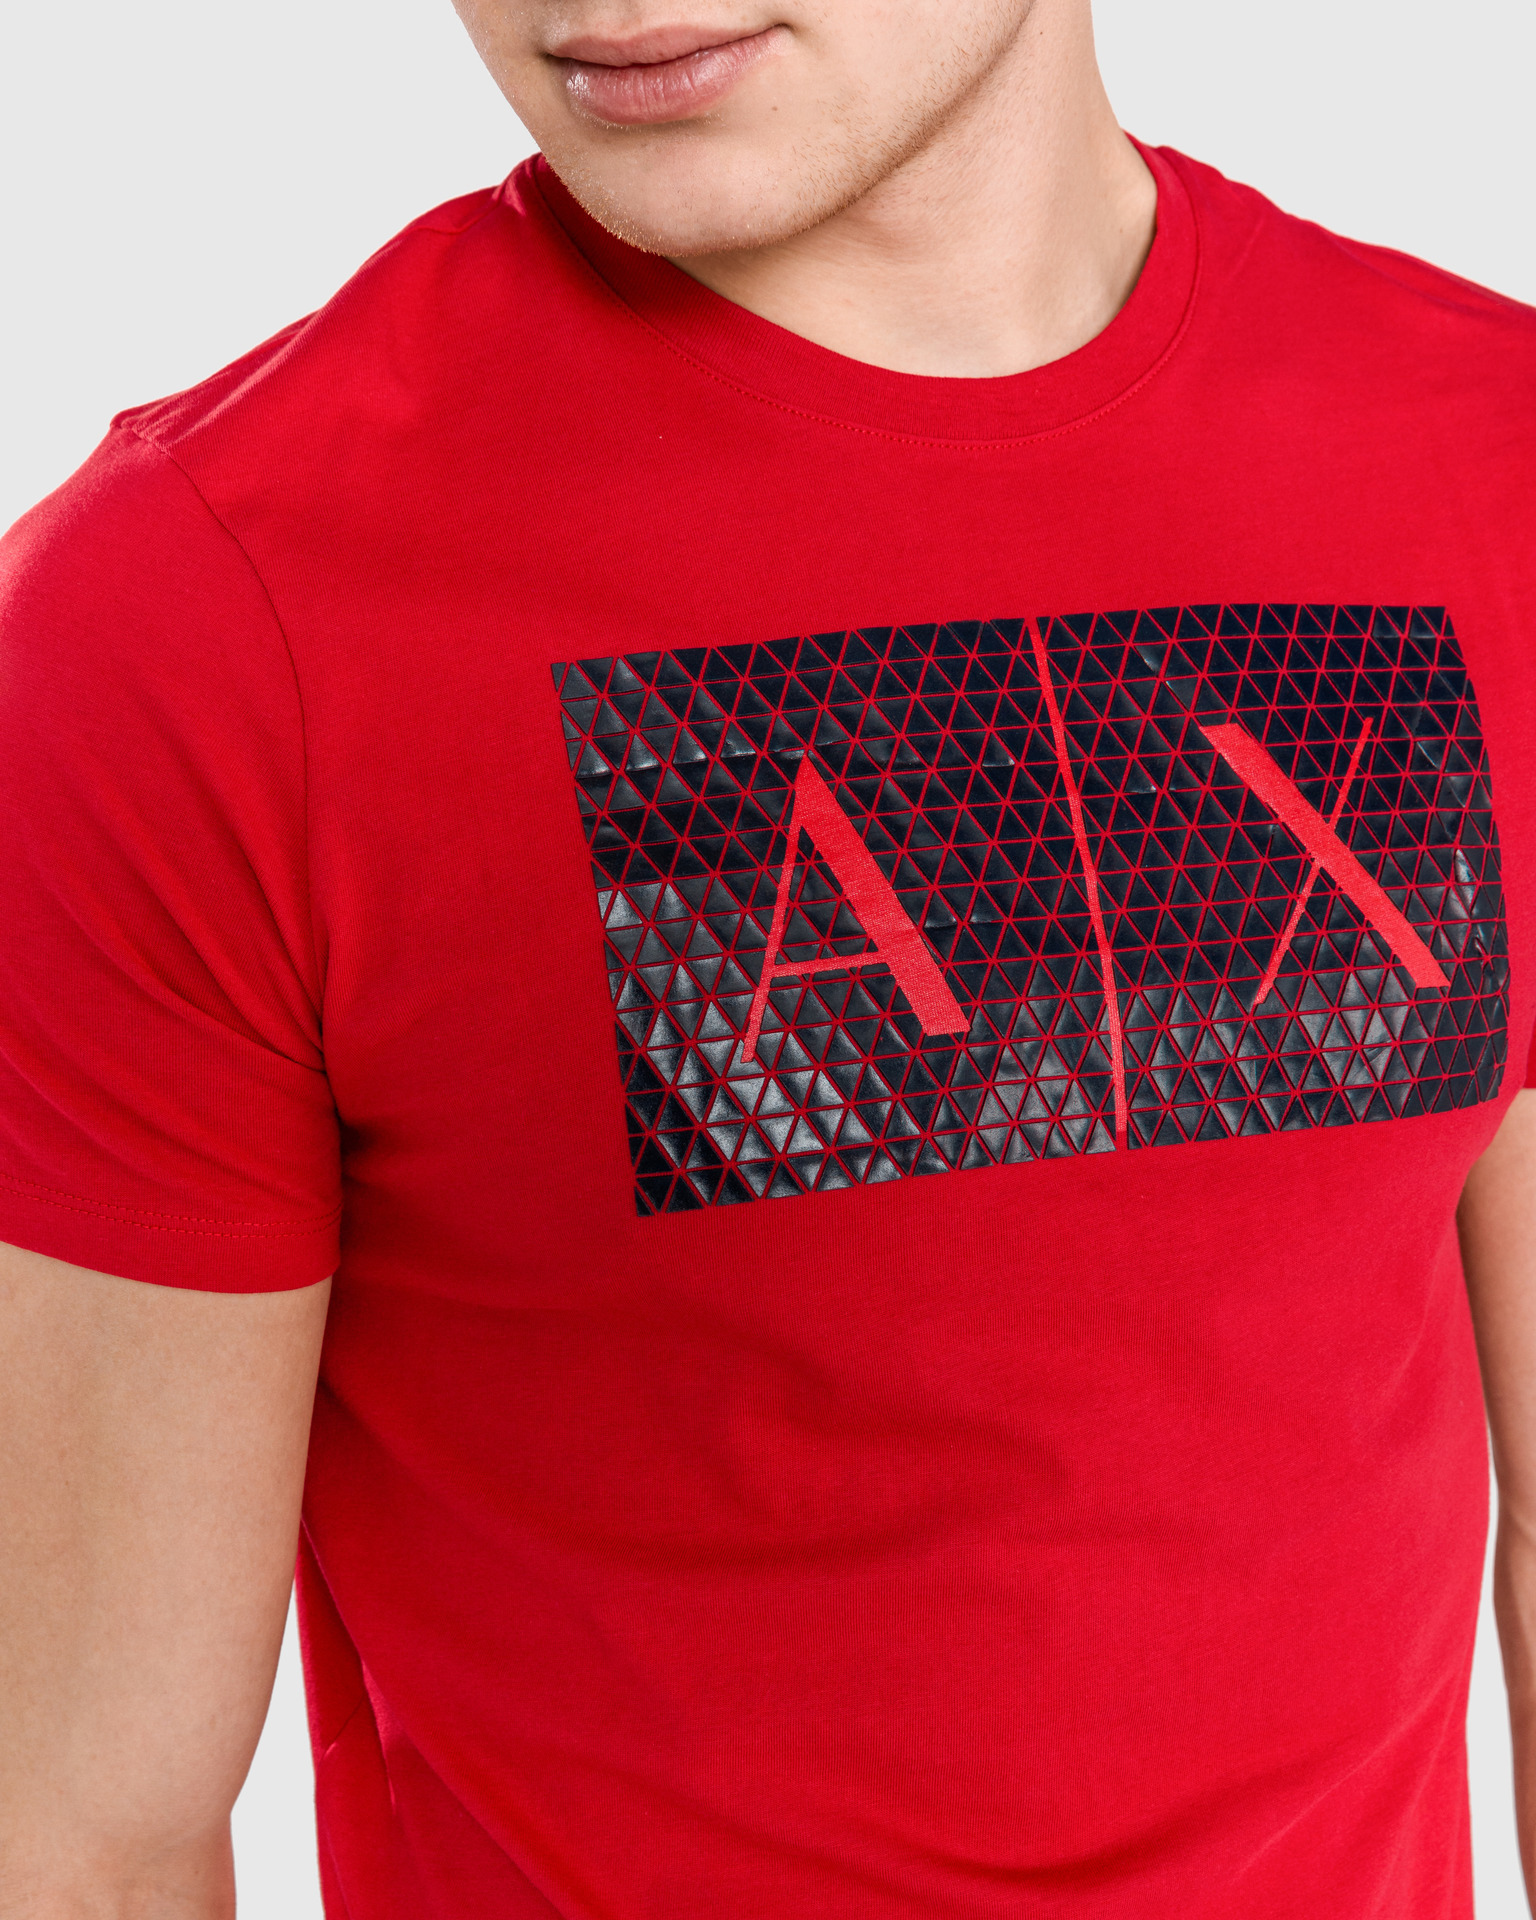 Armani Exchange - T-shirt 